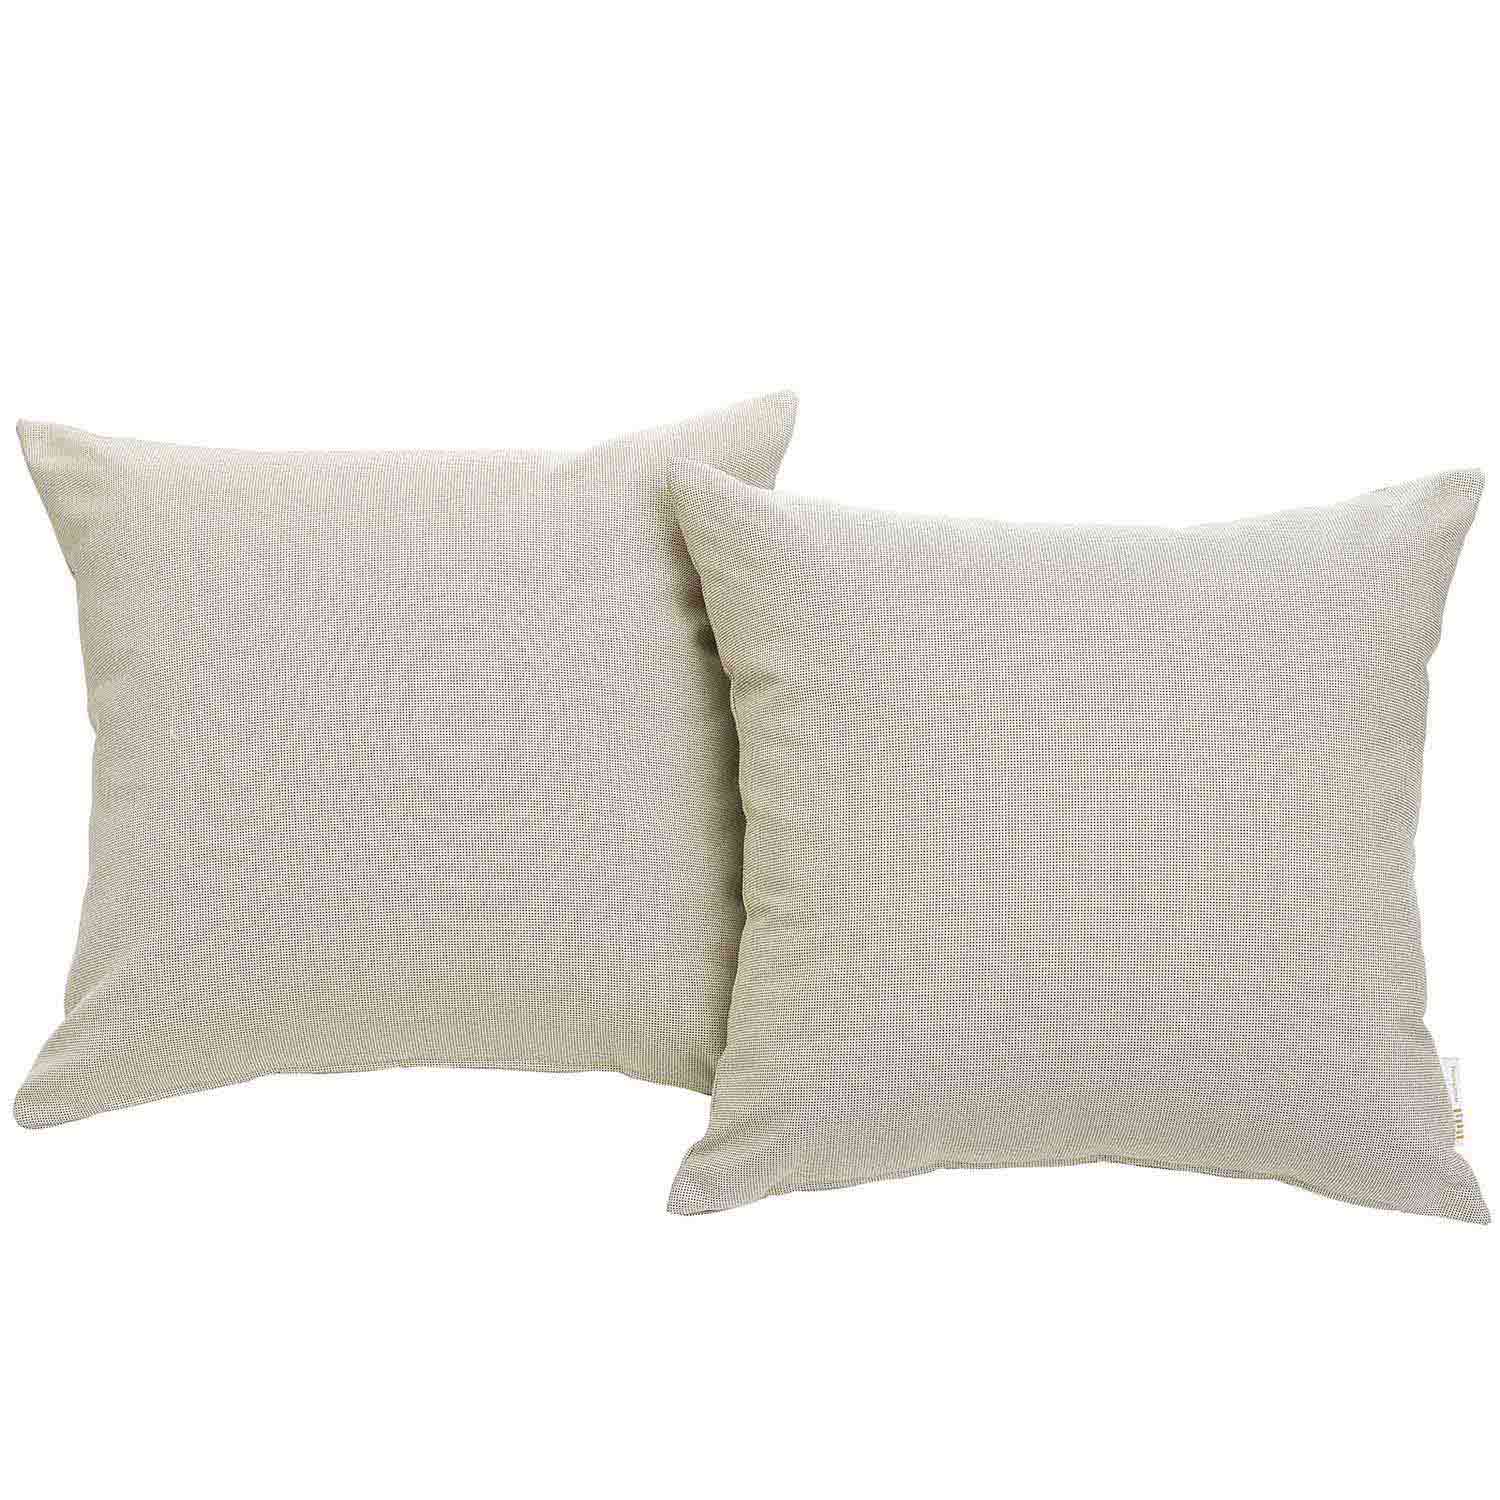 Modway Convene Two Piece Outdoor Patio Pillow Set - Beige